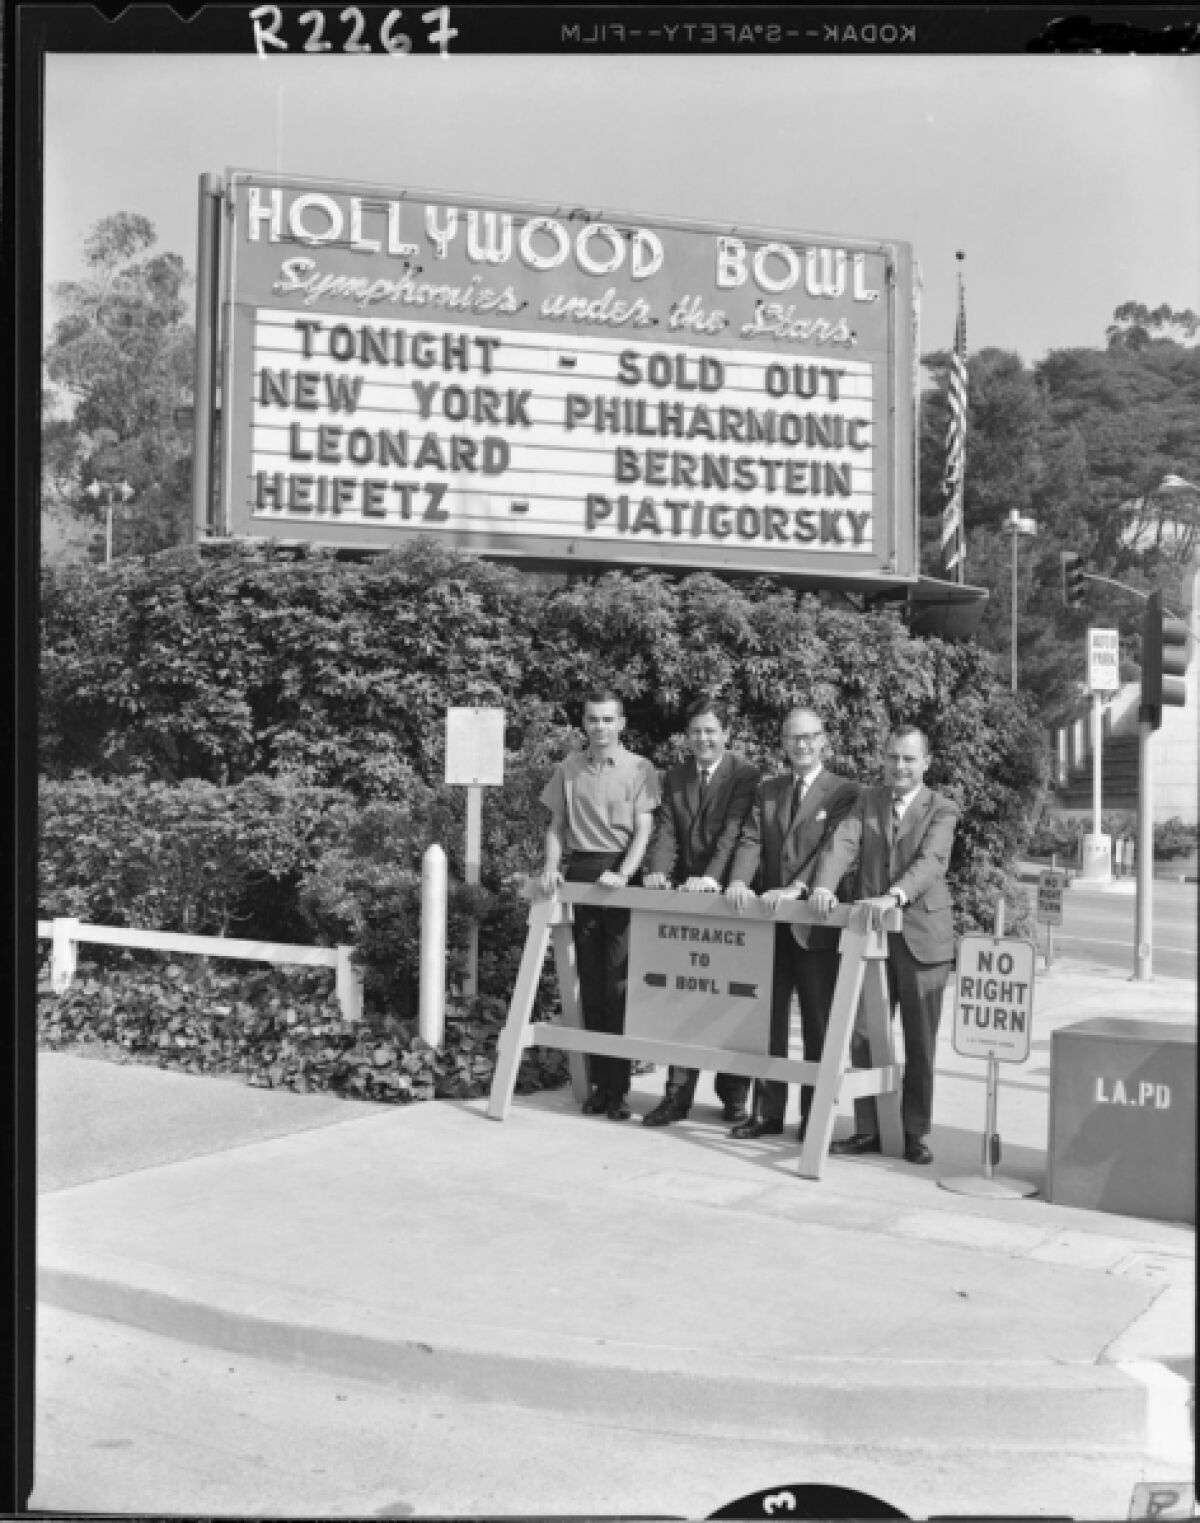 Four men standing under Hollywood Bowl sign.